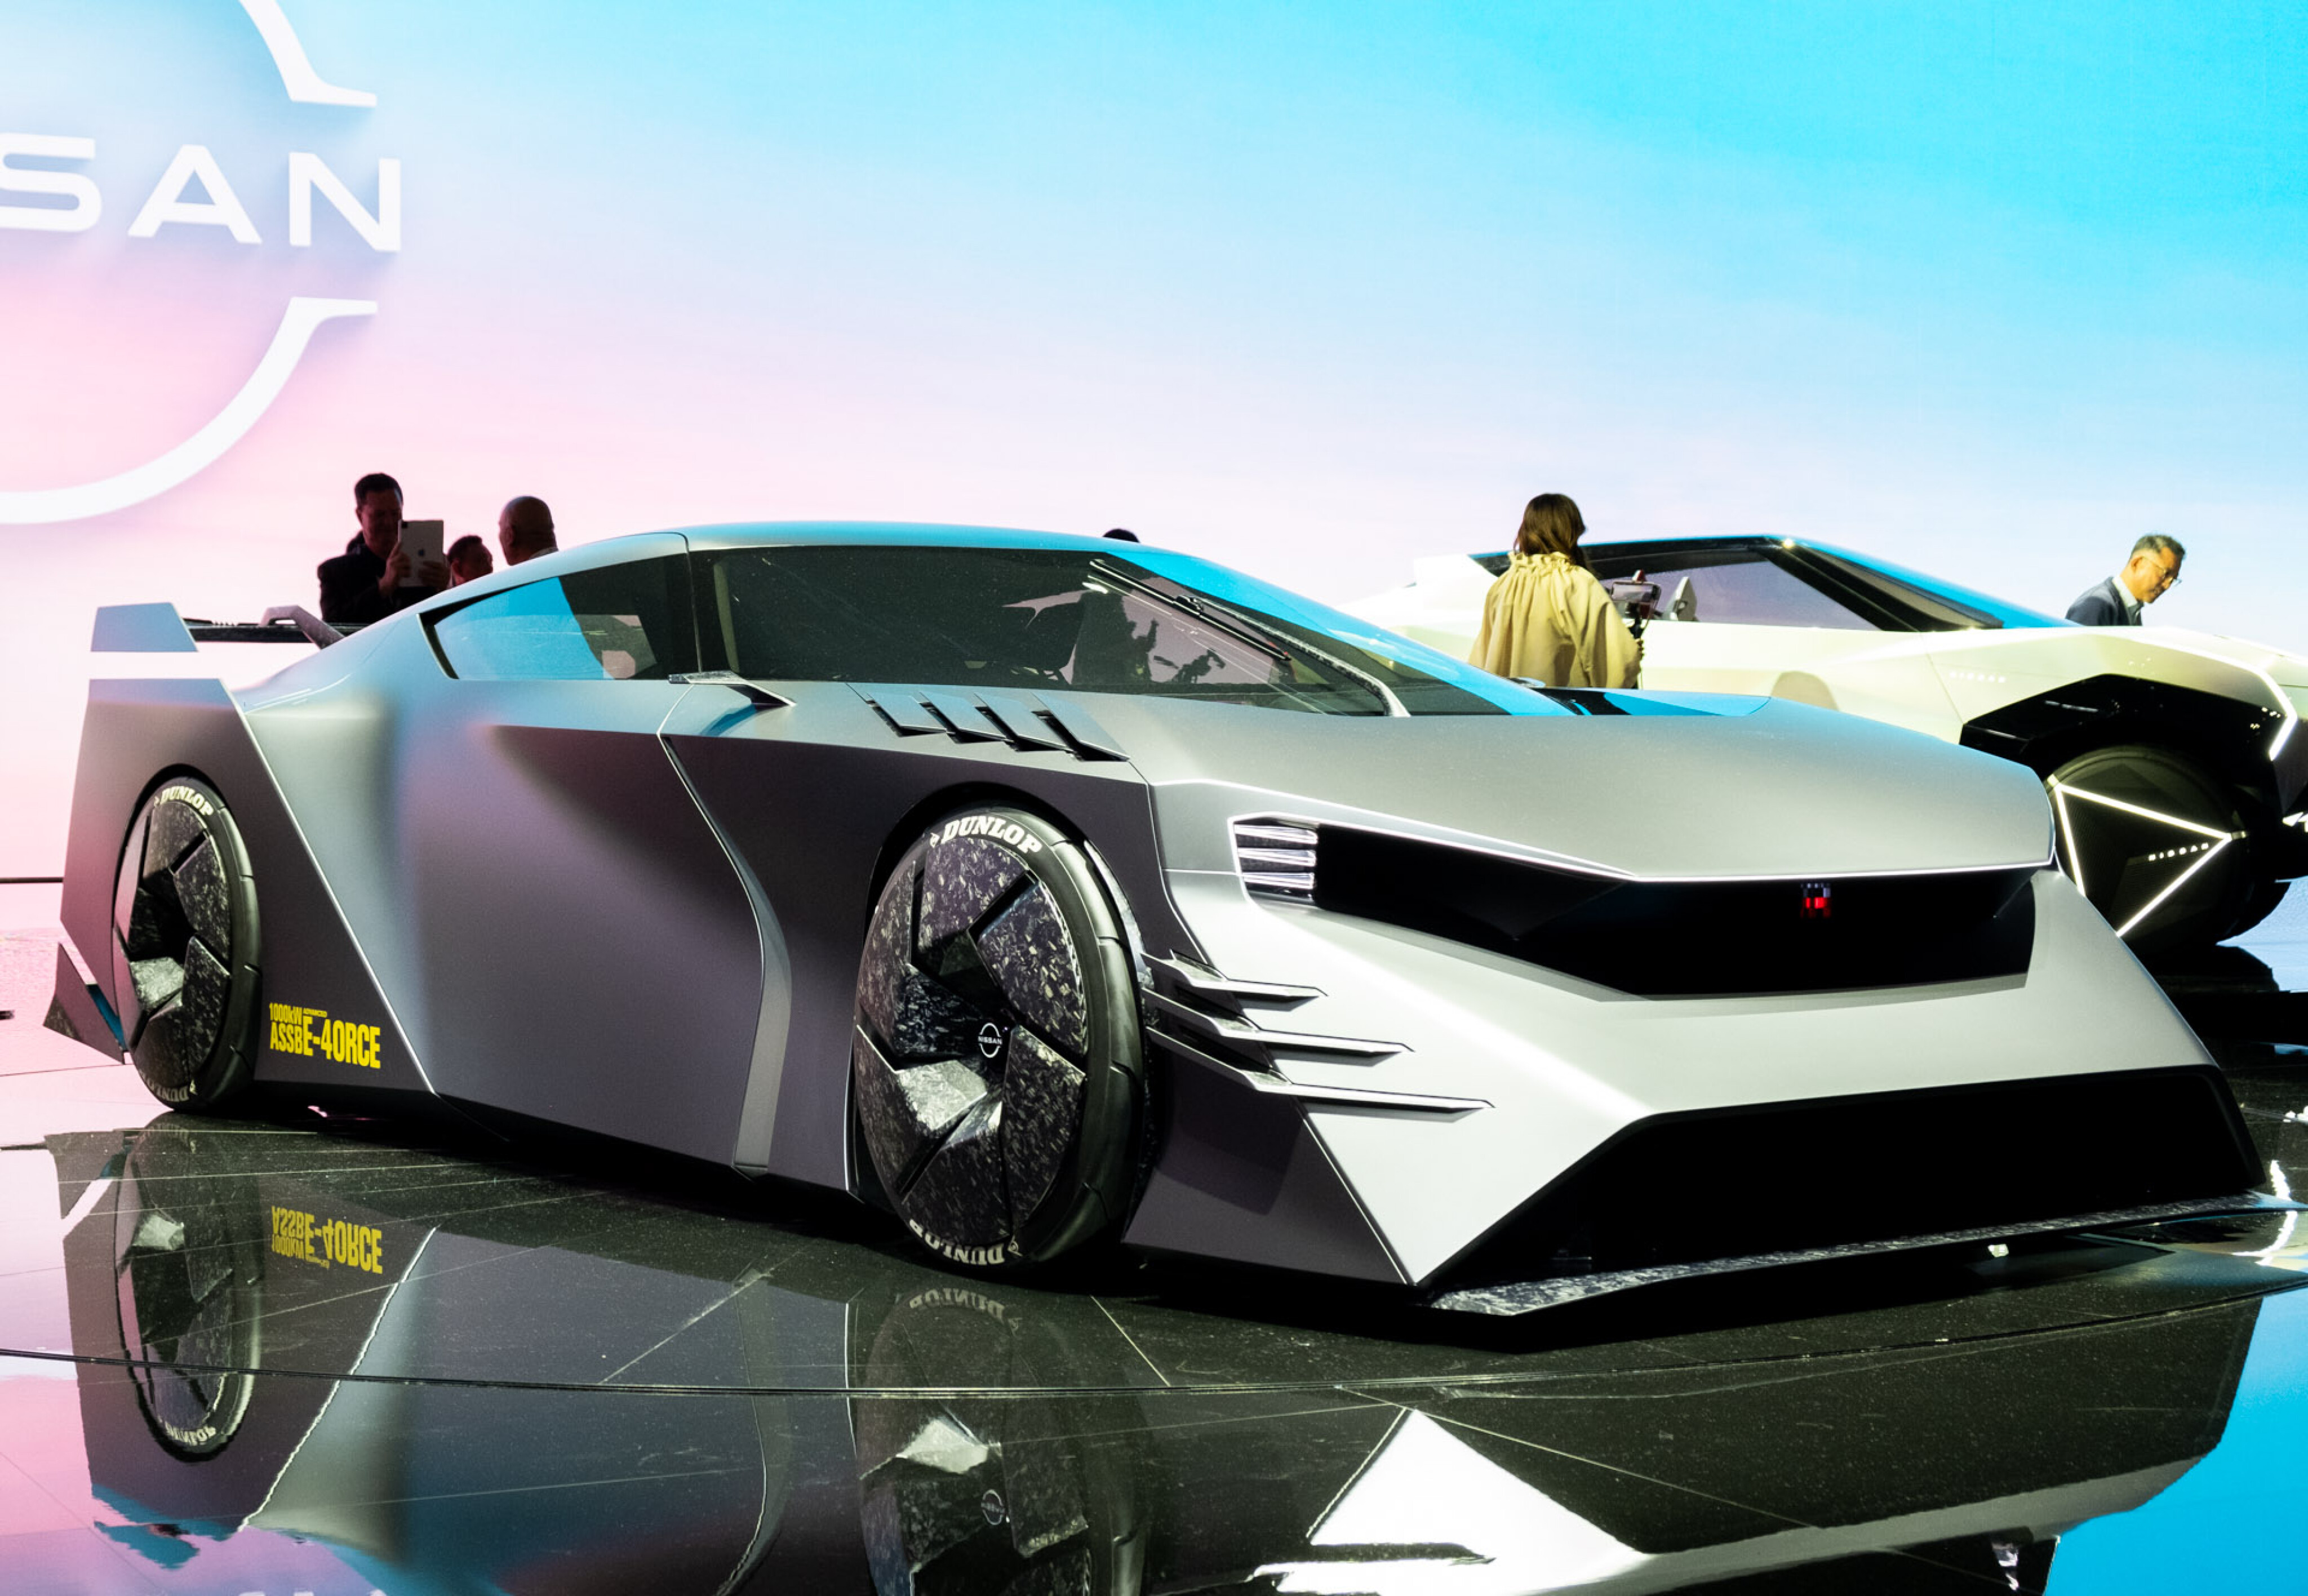 Nissan Hyper Force concept previews future R36 GTR